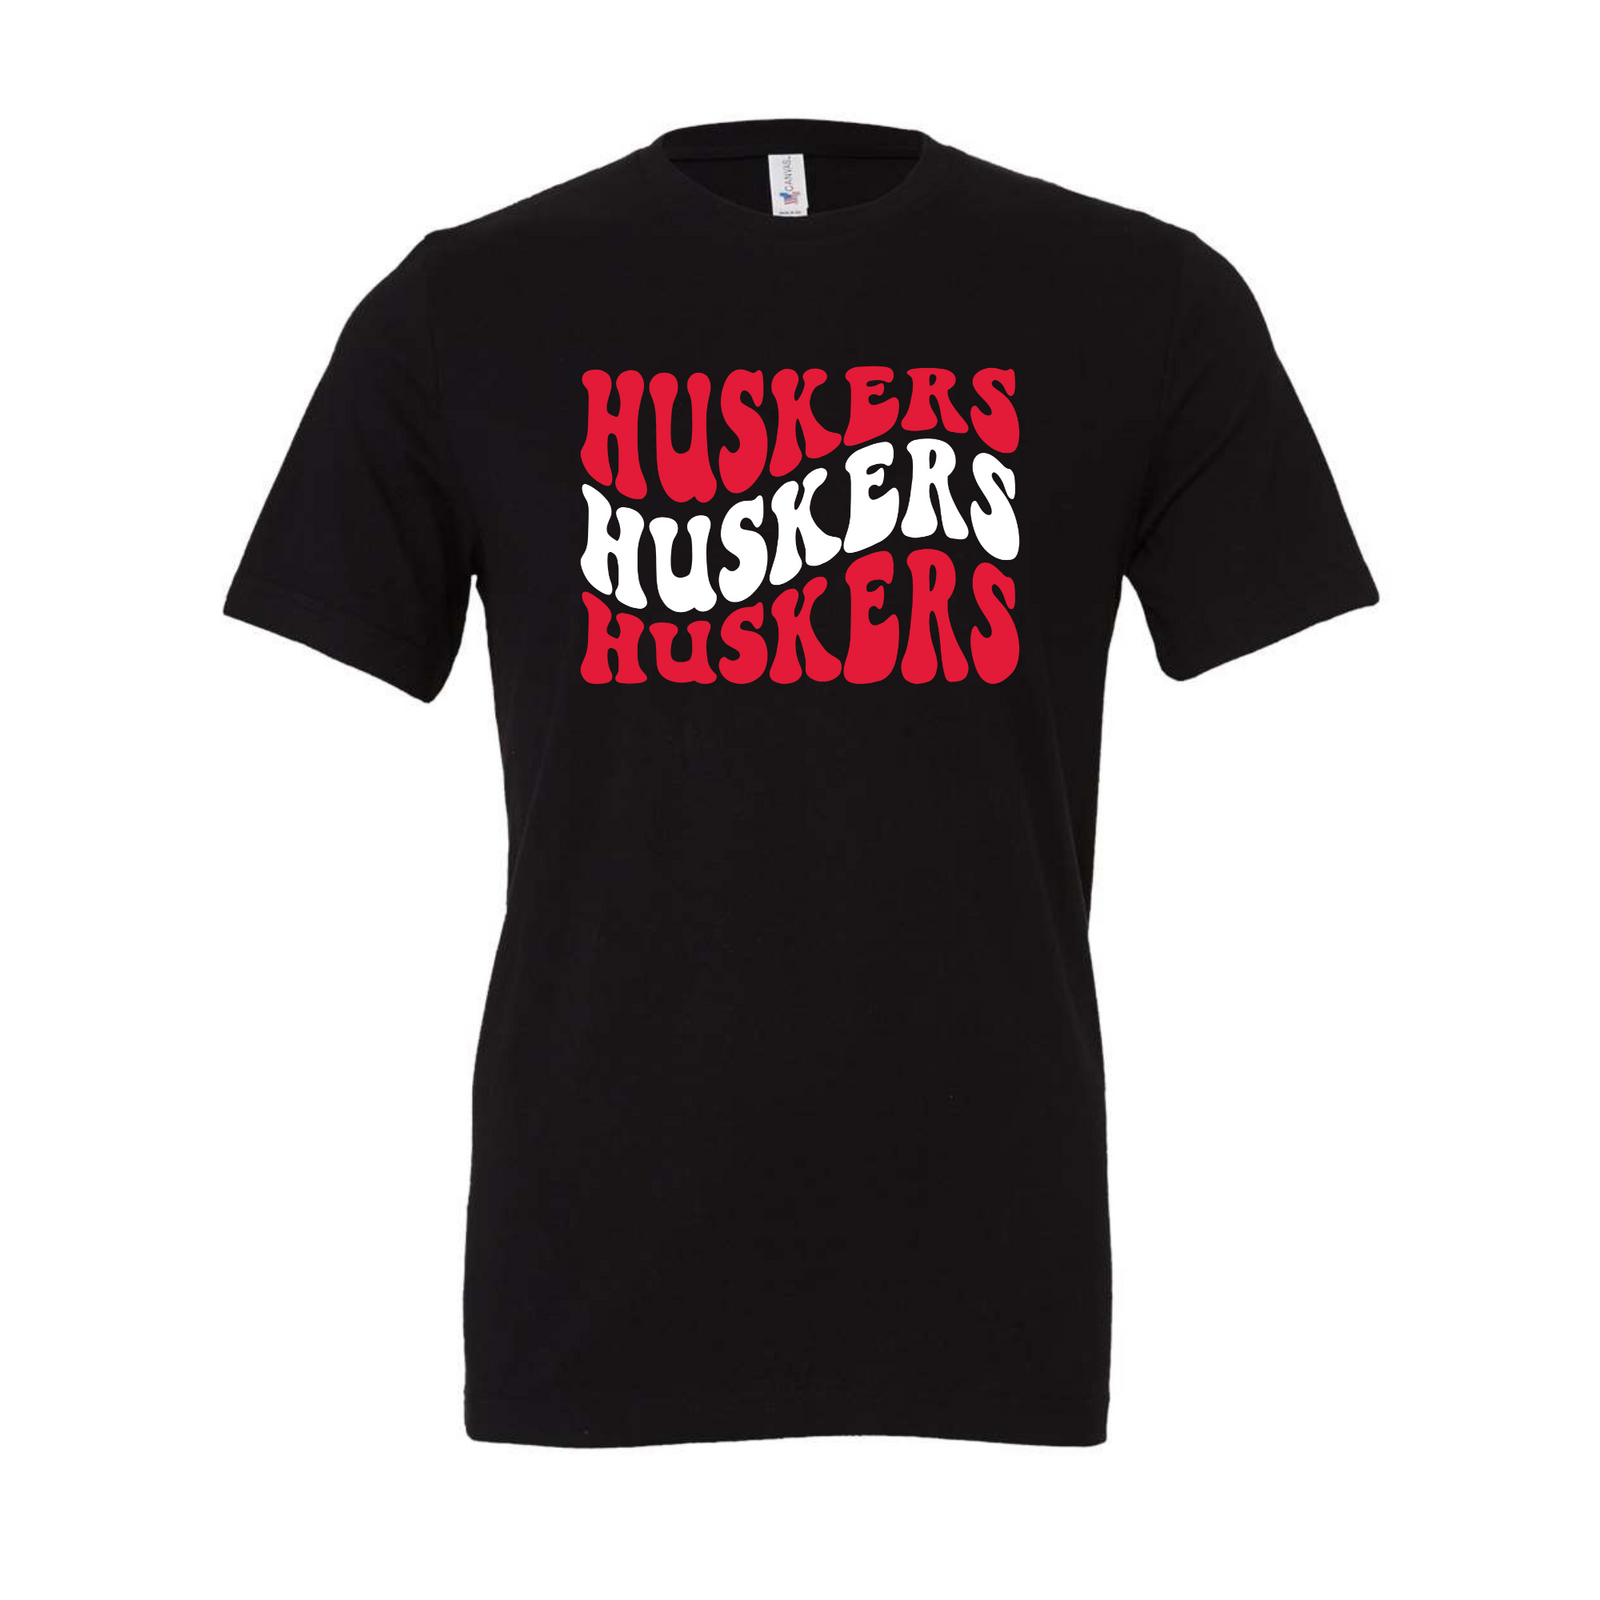 Retro Huskers T-shirt